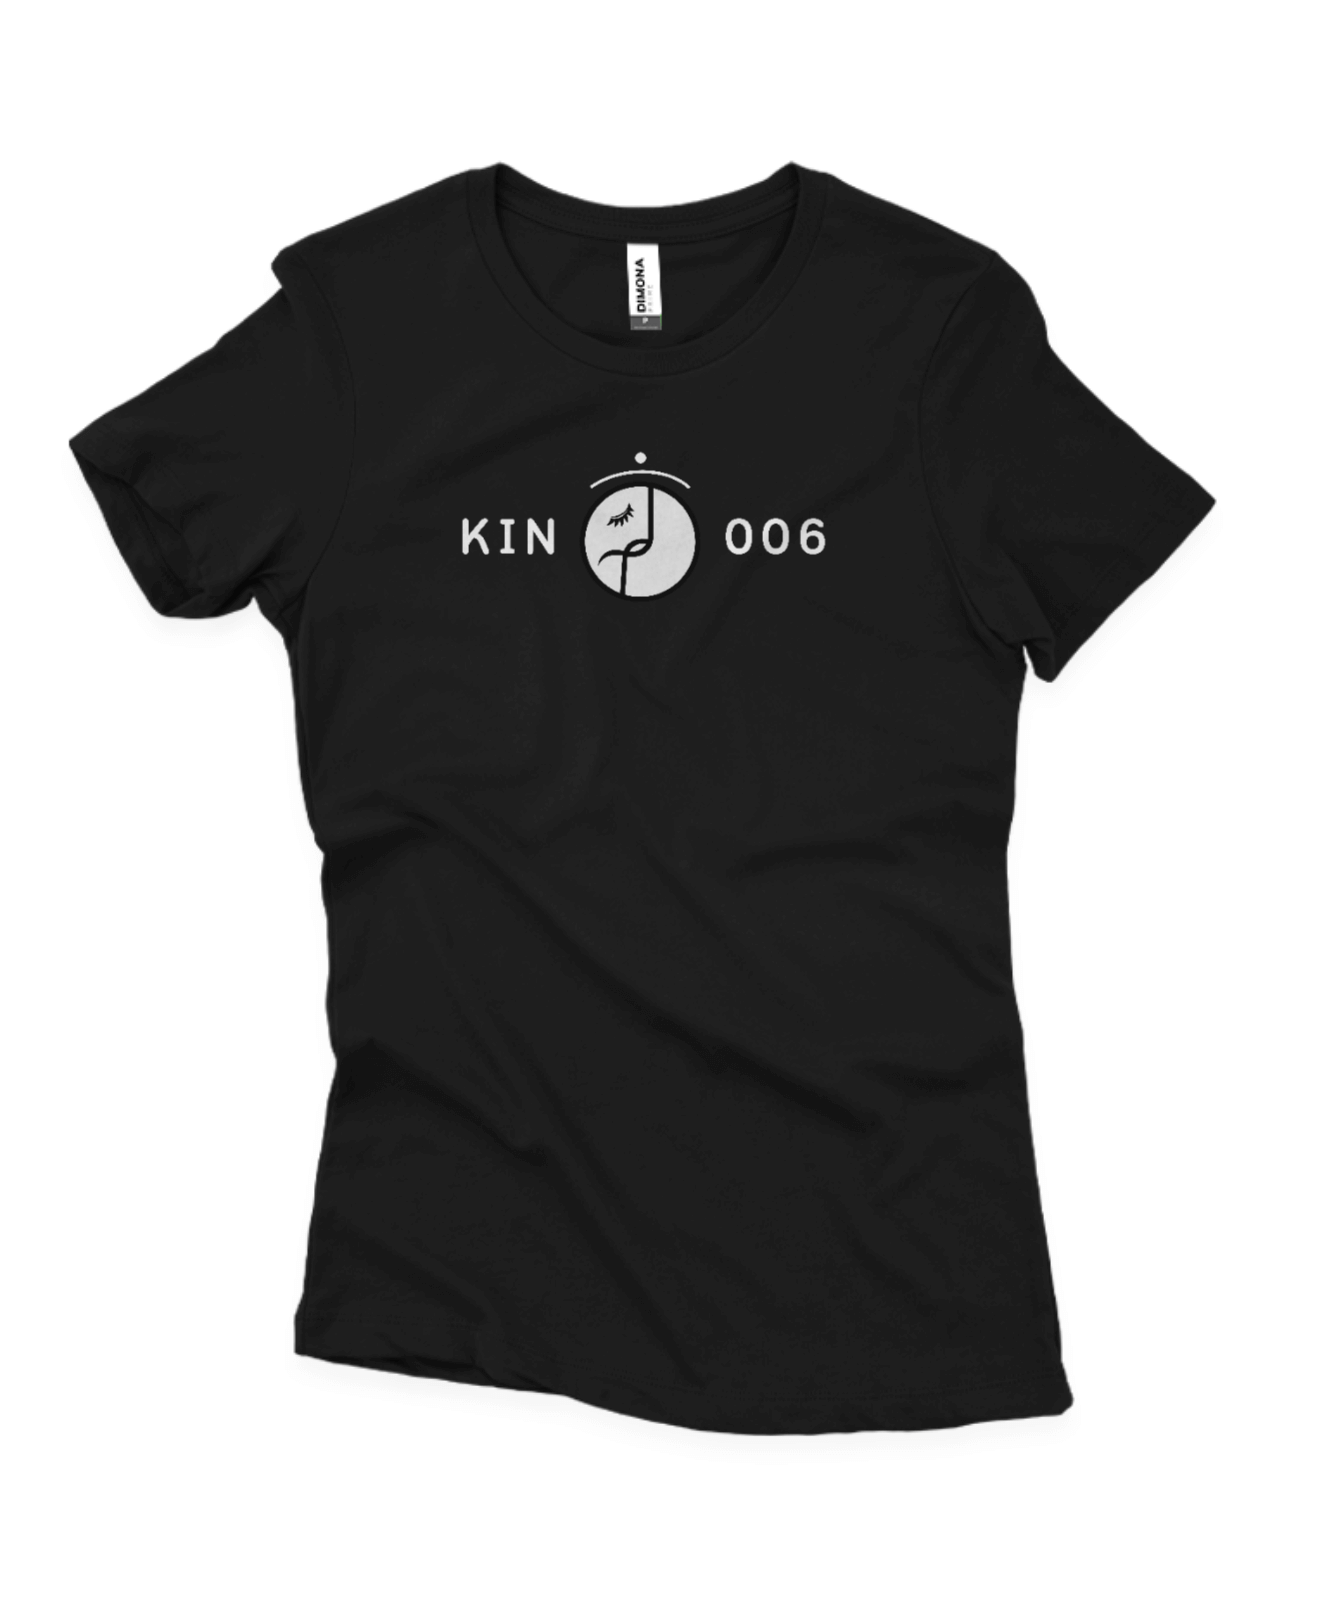 Mockup Camisa Preta - Camisa Feminina Kin 006 - Enlaçador de Mundos Rítmico - Kin 06 - Kin 6